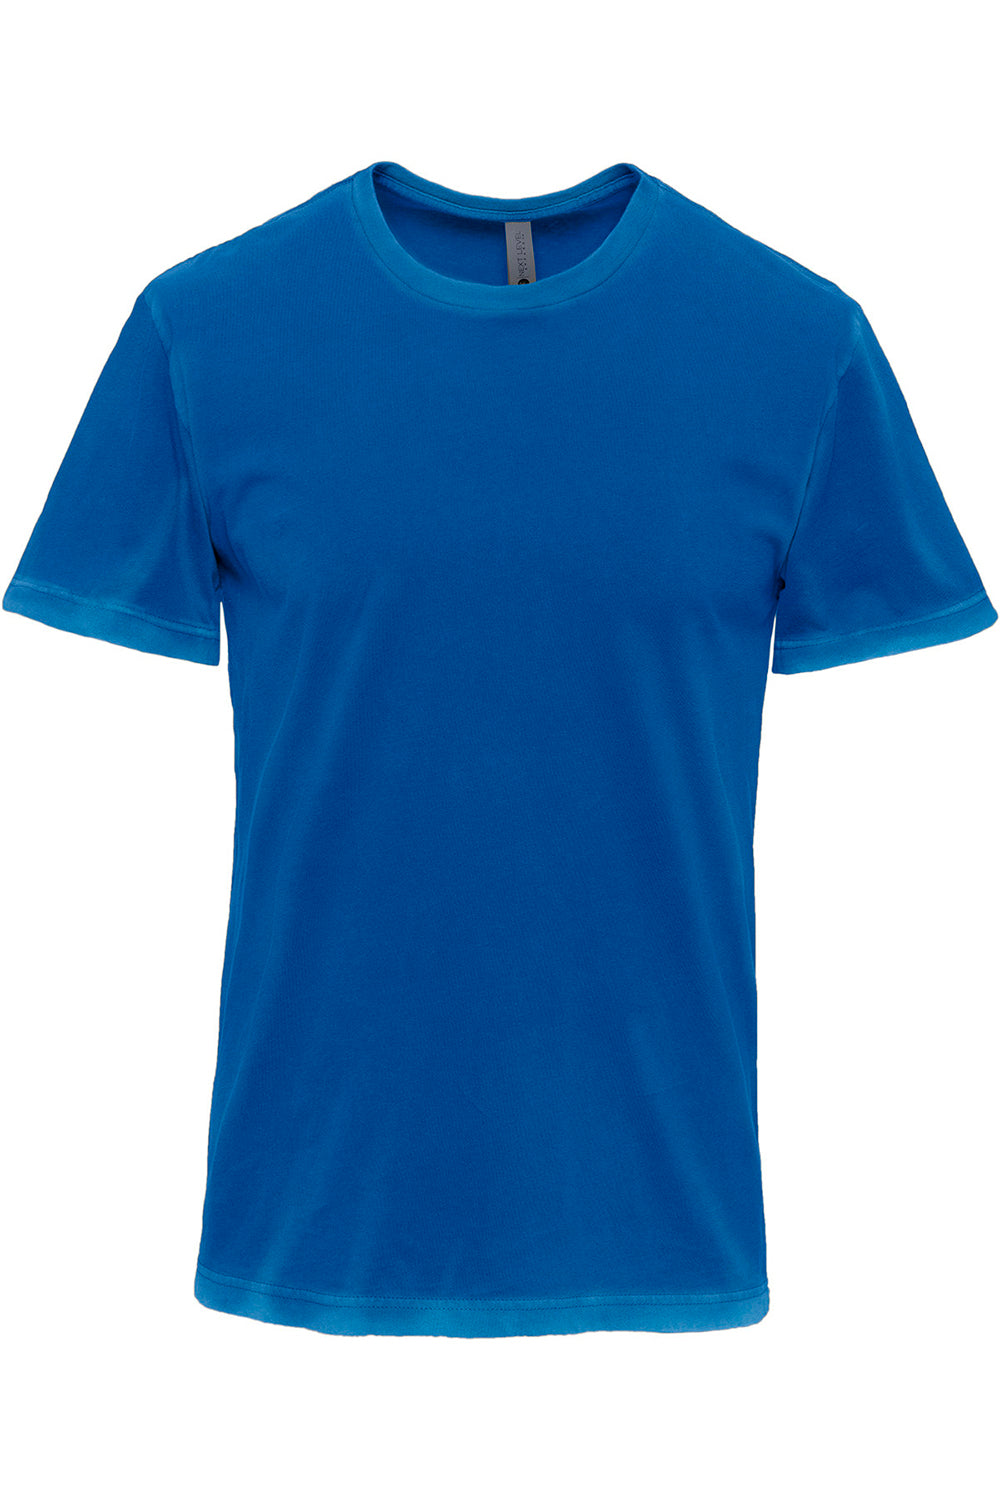 Next Level 3600SW Mens Soft Wash Short Sleeve Crewneck T-Shirt Royal Blue Flat Front